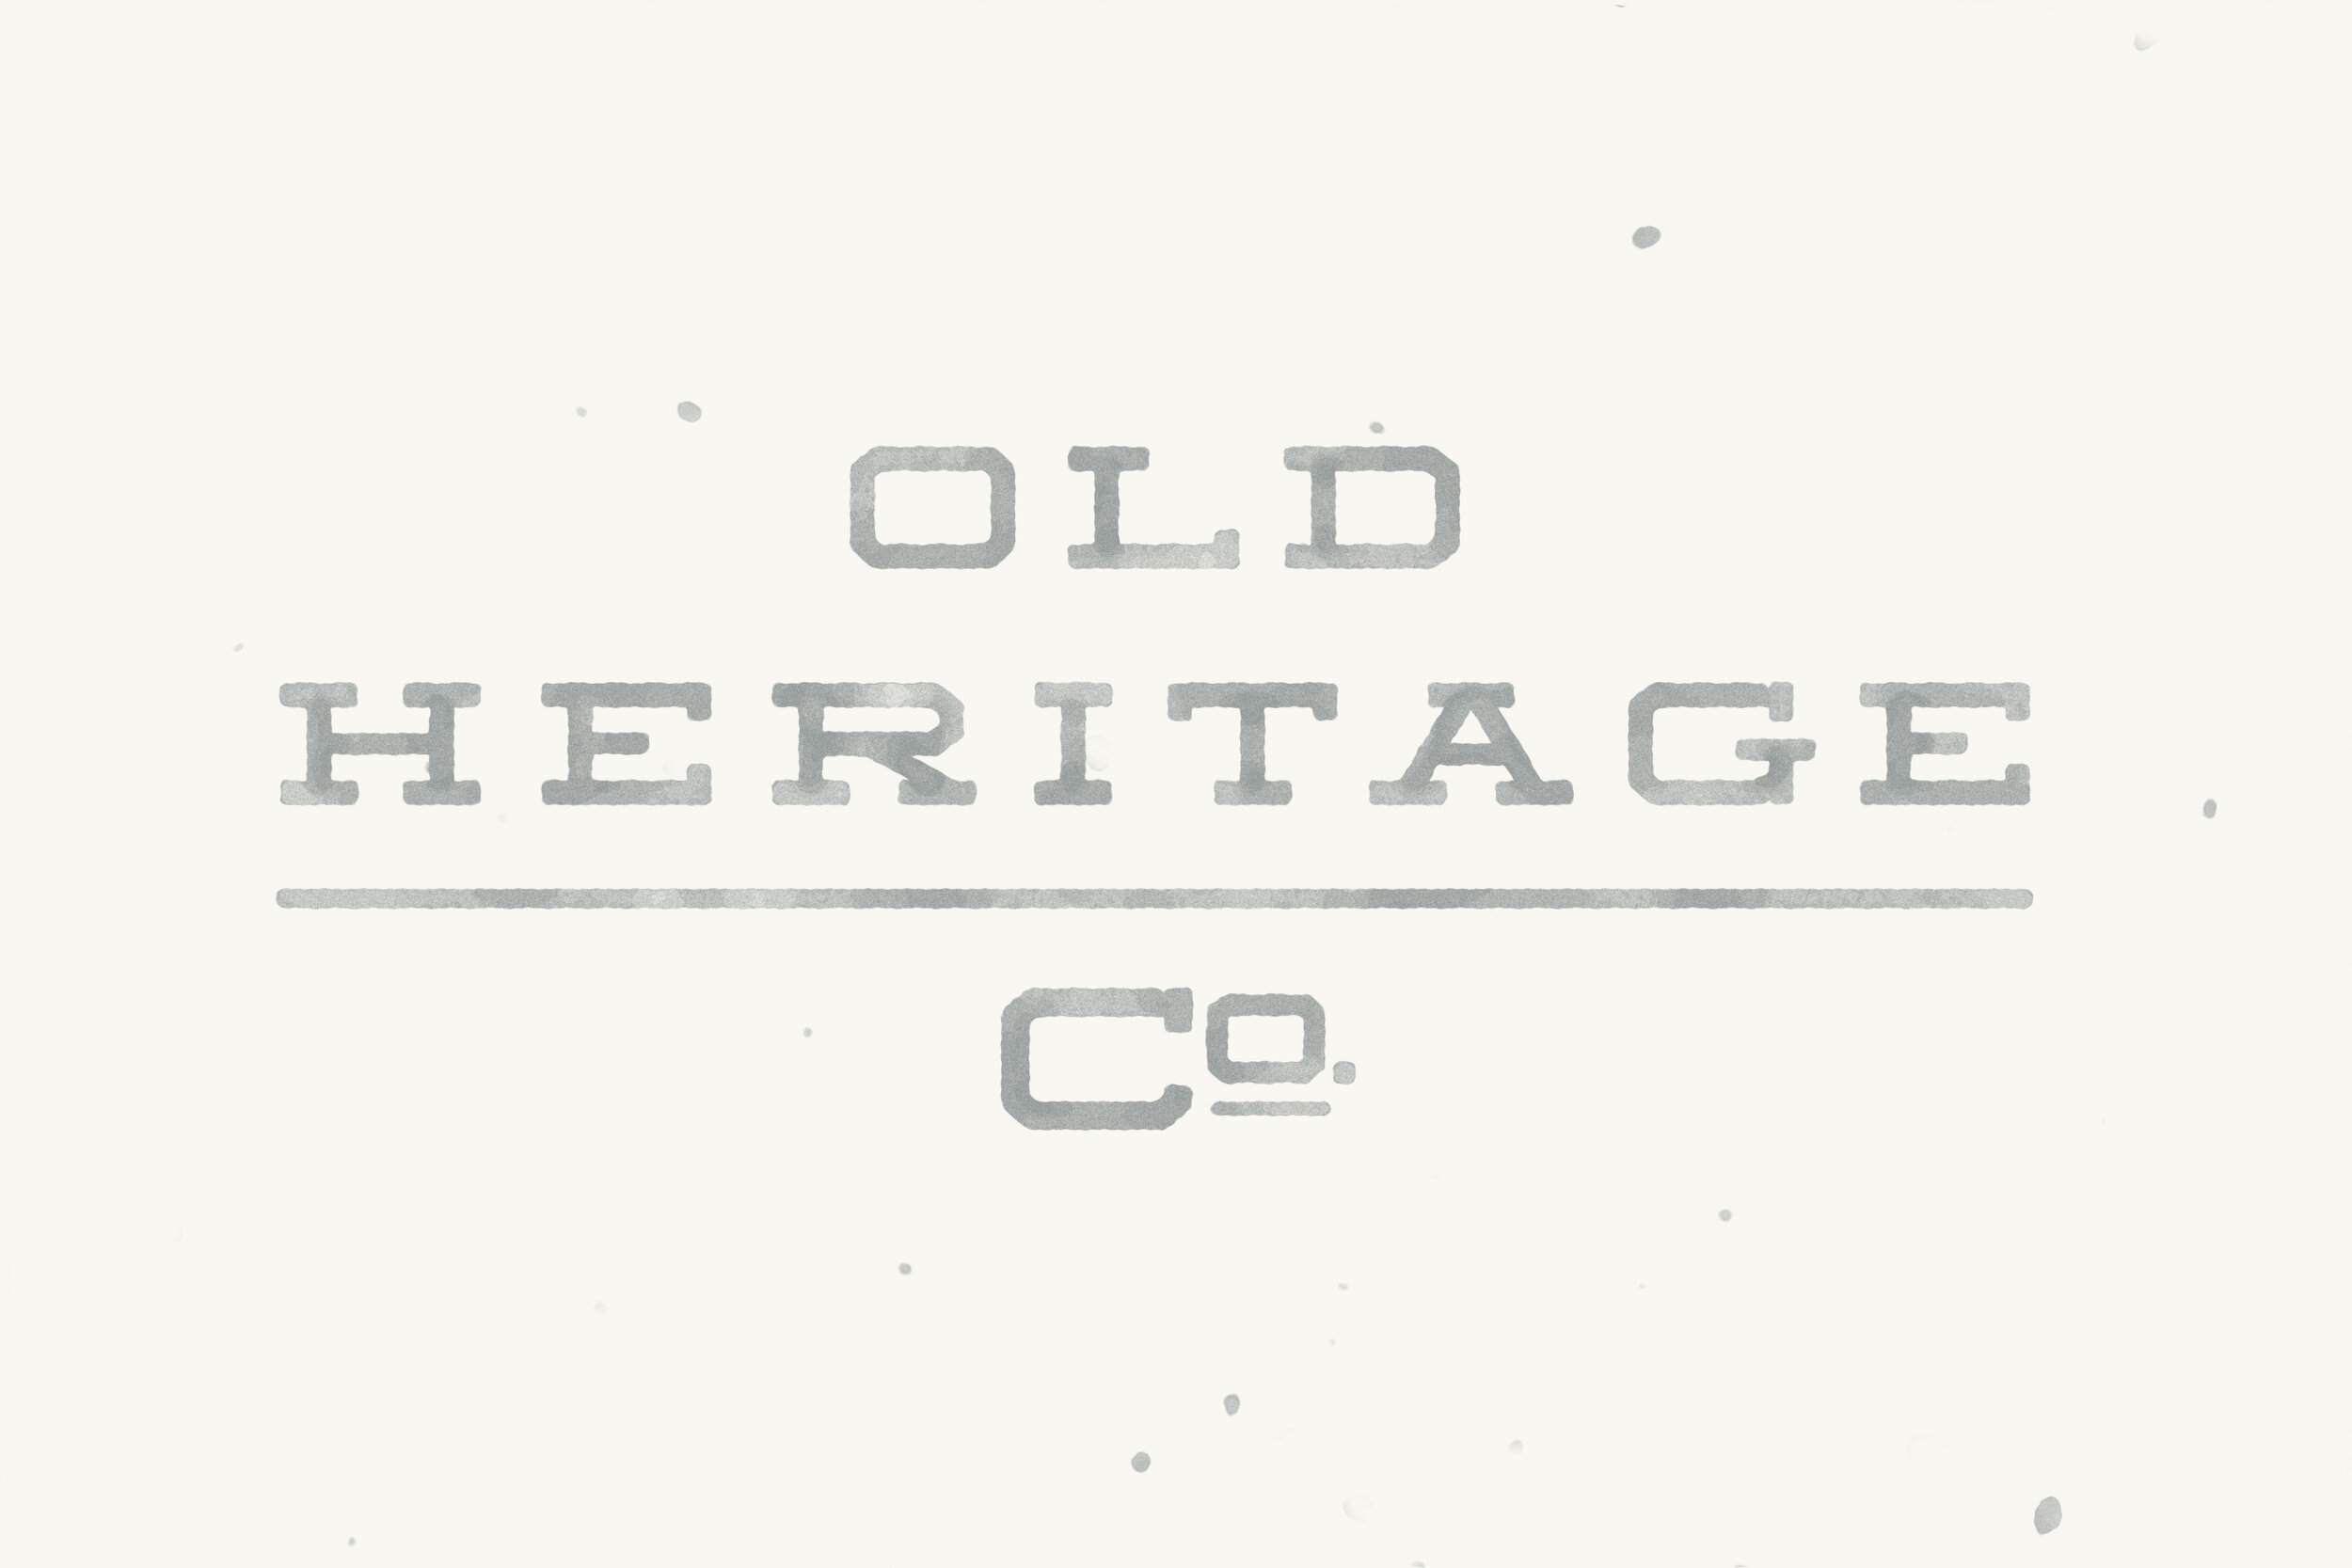 Old_Heritage_Primary_updated.jpg